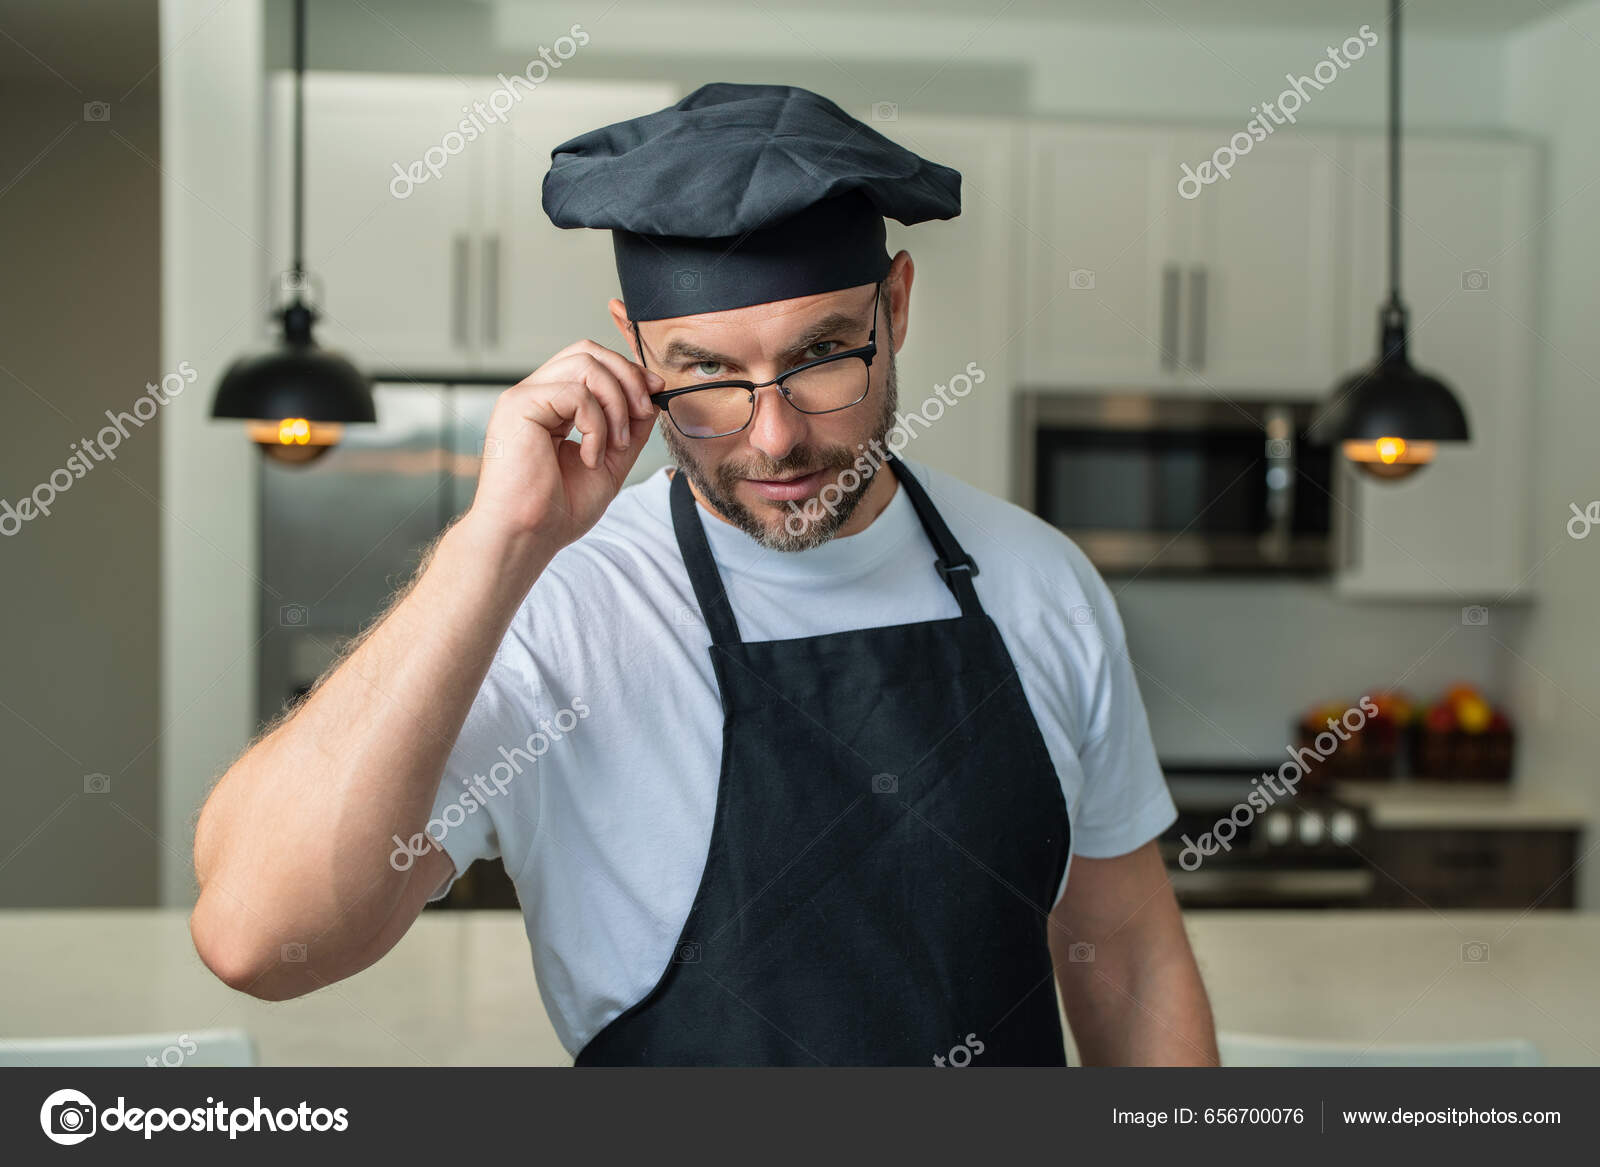 https://st5.depositphotos.com/3584053/65670/i/1600/depositphotos_656700076-stock-photo-handsome-middle-age-man-chef.jpg